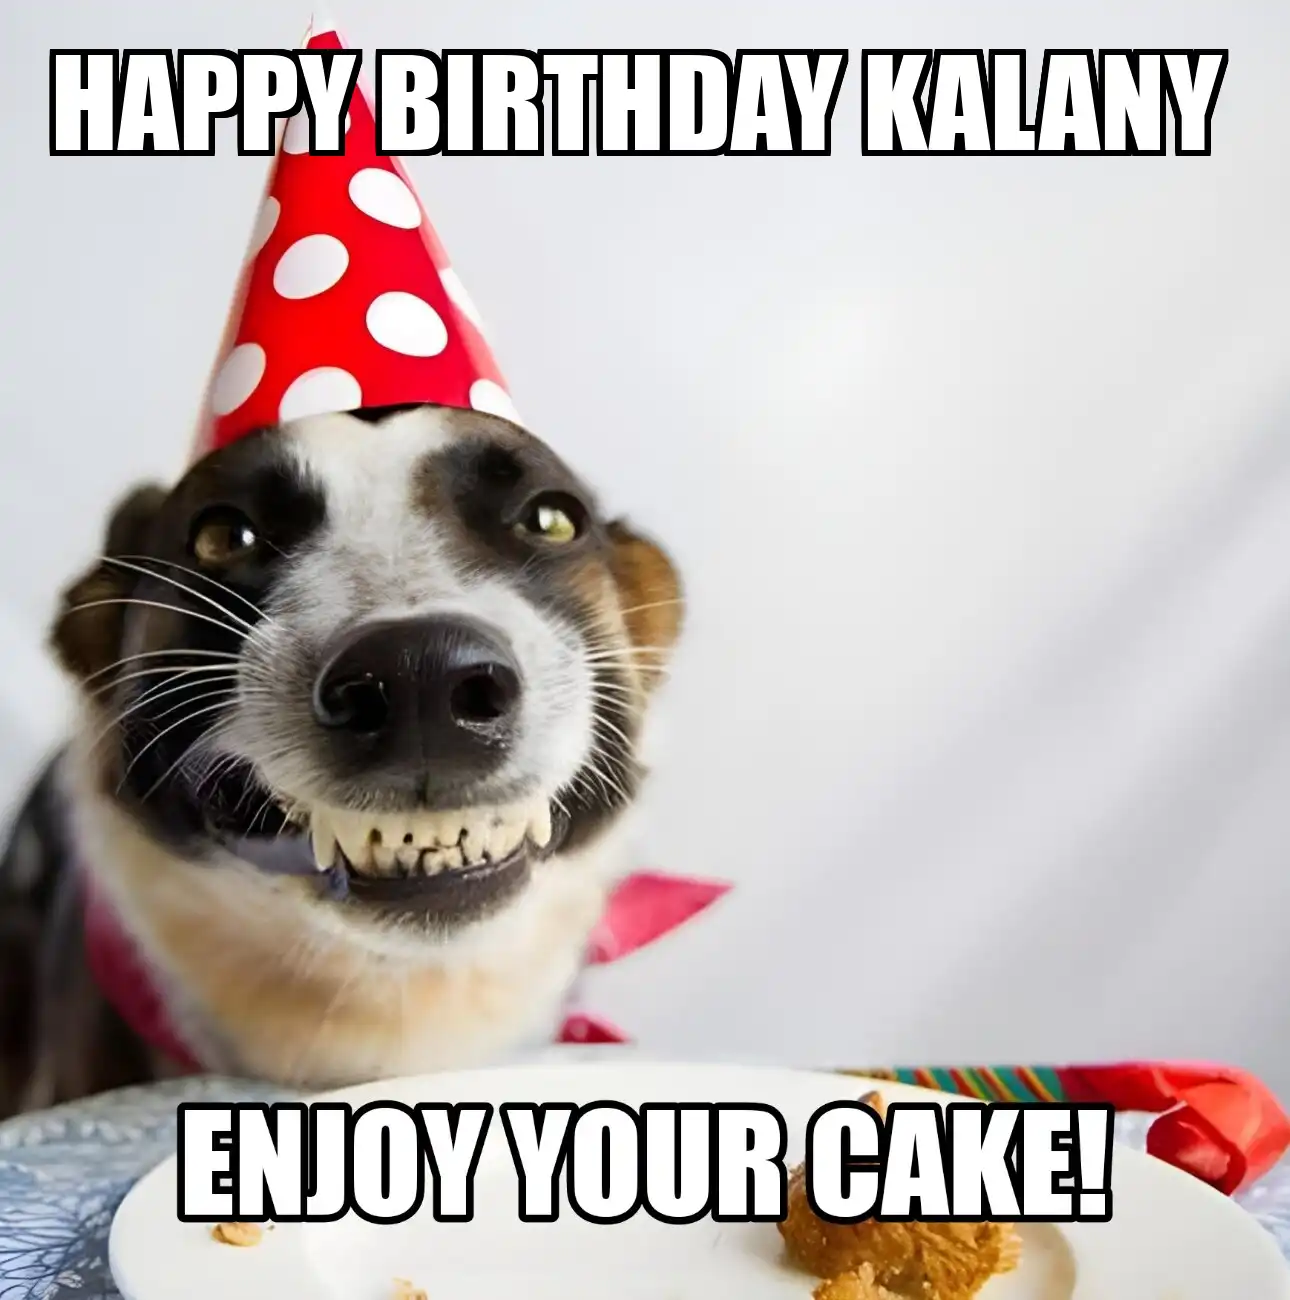 Happy Birthday Kalany Enjoy Your Cake Dog Meme